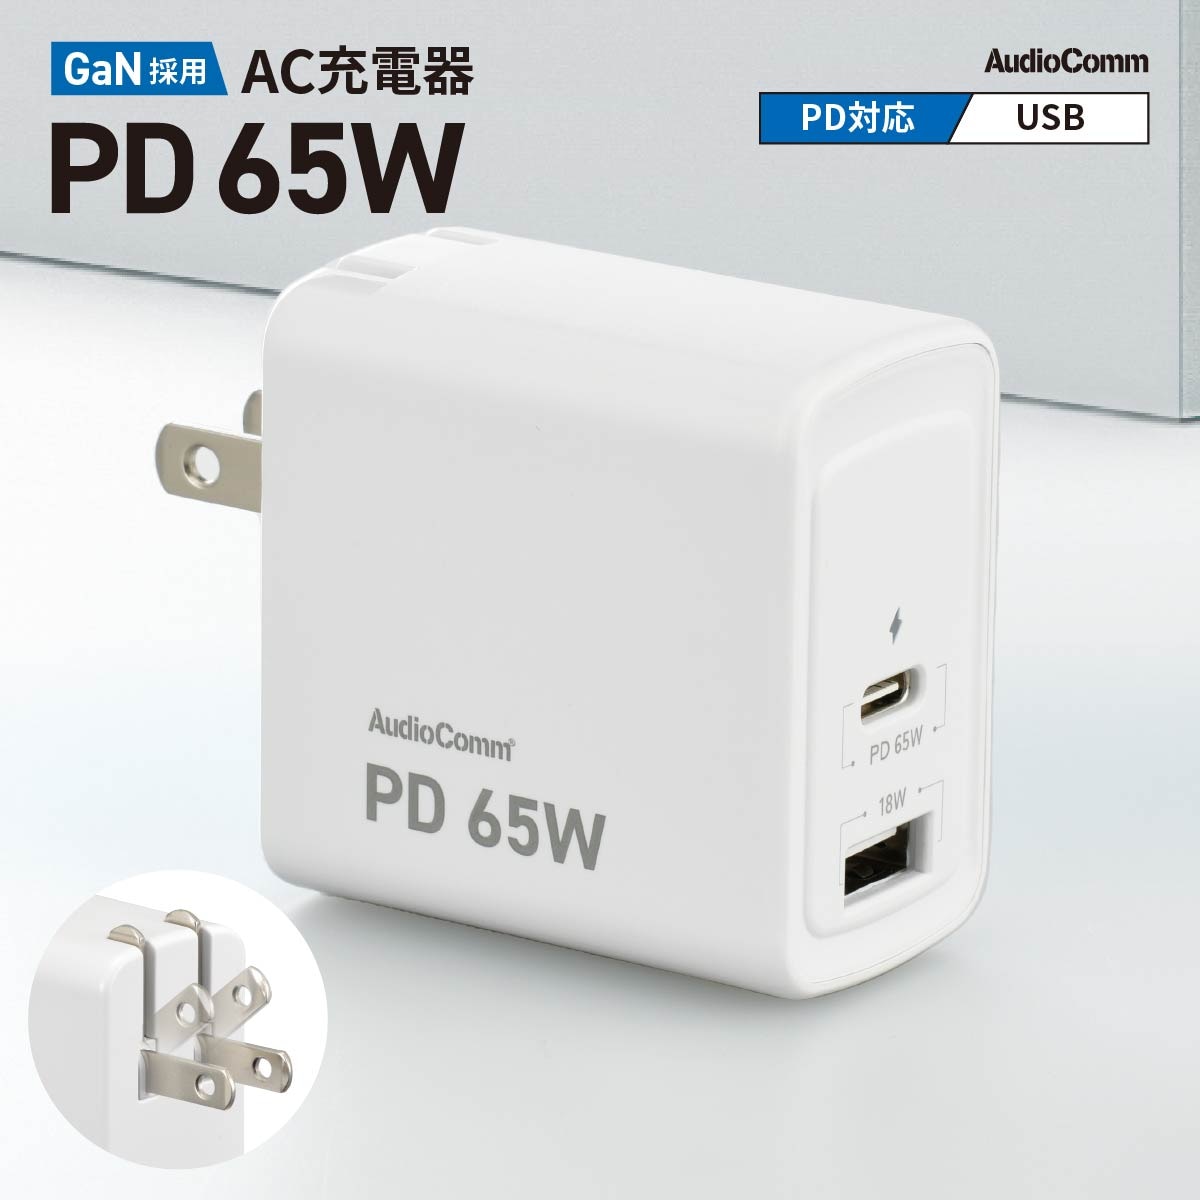 AudioComm_ACŴ GaN USB PDб 65W []01-3798